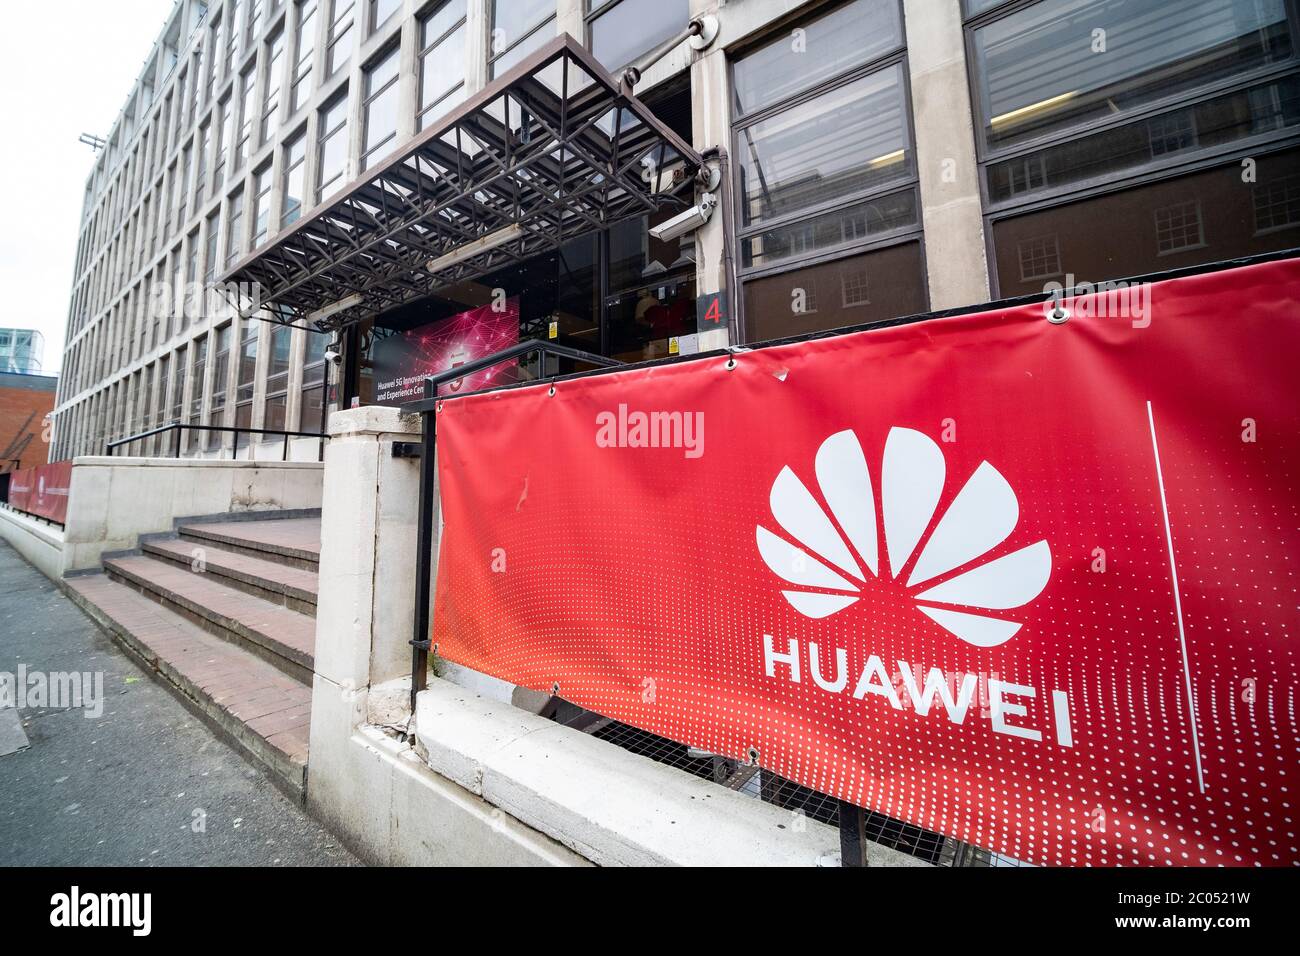 LONDON - JUNI 2020: Huawei Research and Development in the City of London - Chinesisches multinationales Technologieunternehmen Stockfoto